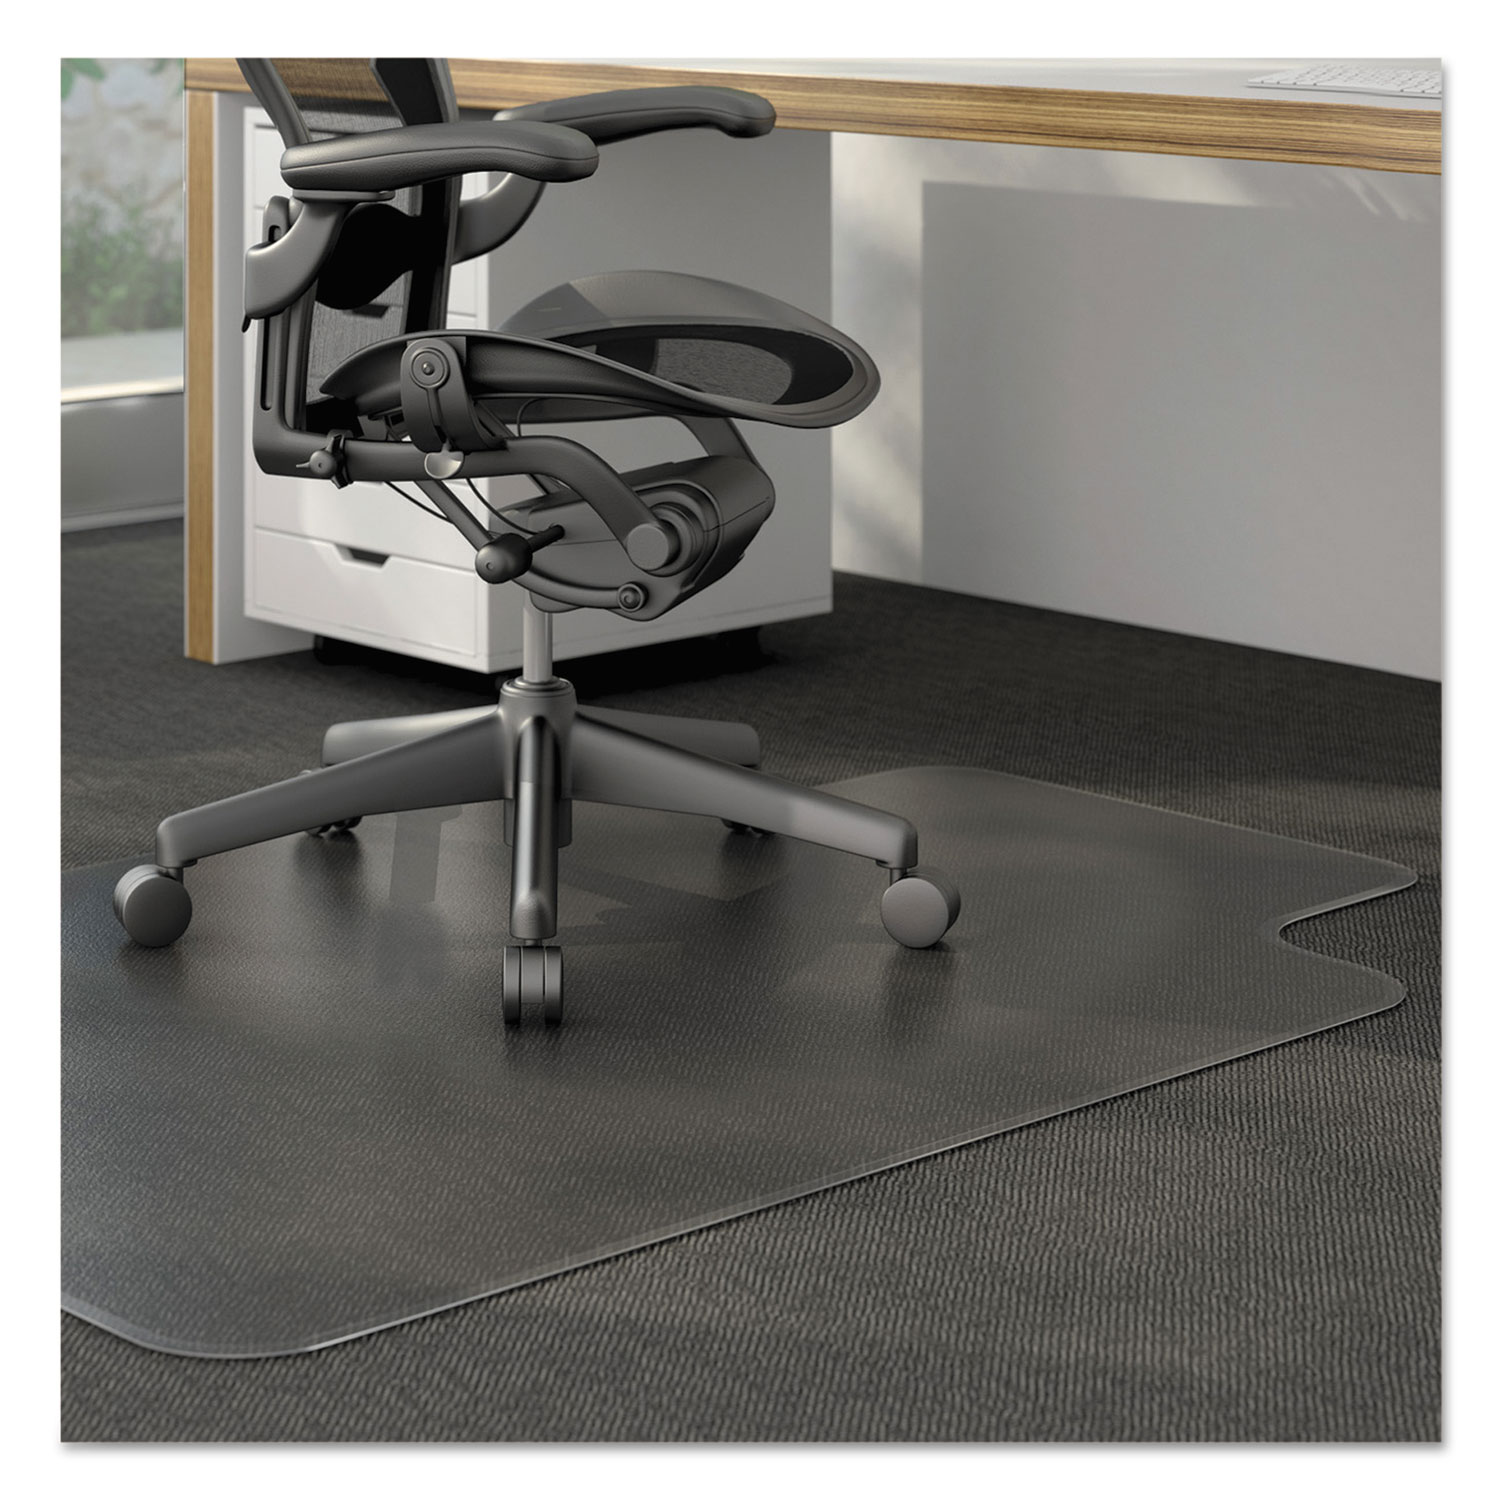 Carpet 36" x 48" Heavy Duty Protection Office Desk Chair Mat for Hard Floors 